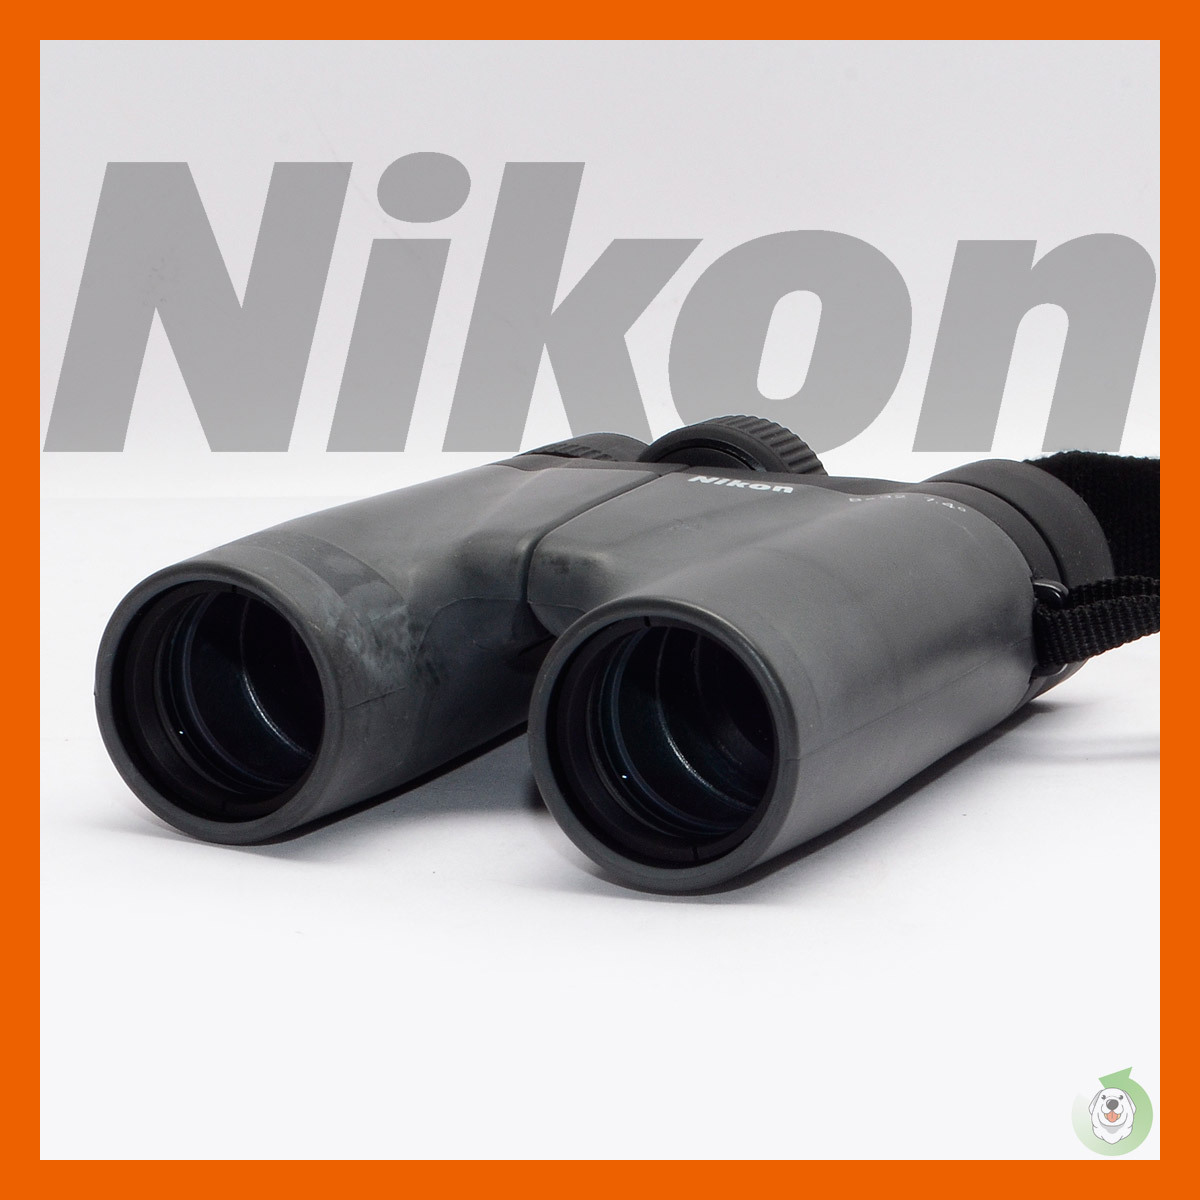 Nikon/ Nikon e Spacio binoculars 8×32 7.4° ESPACIO special case attaching 